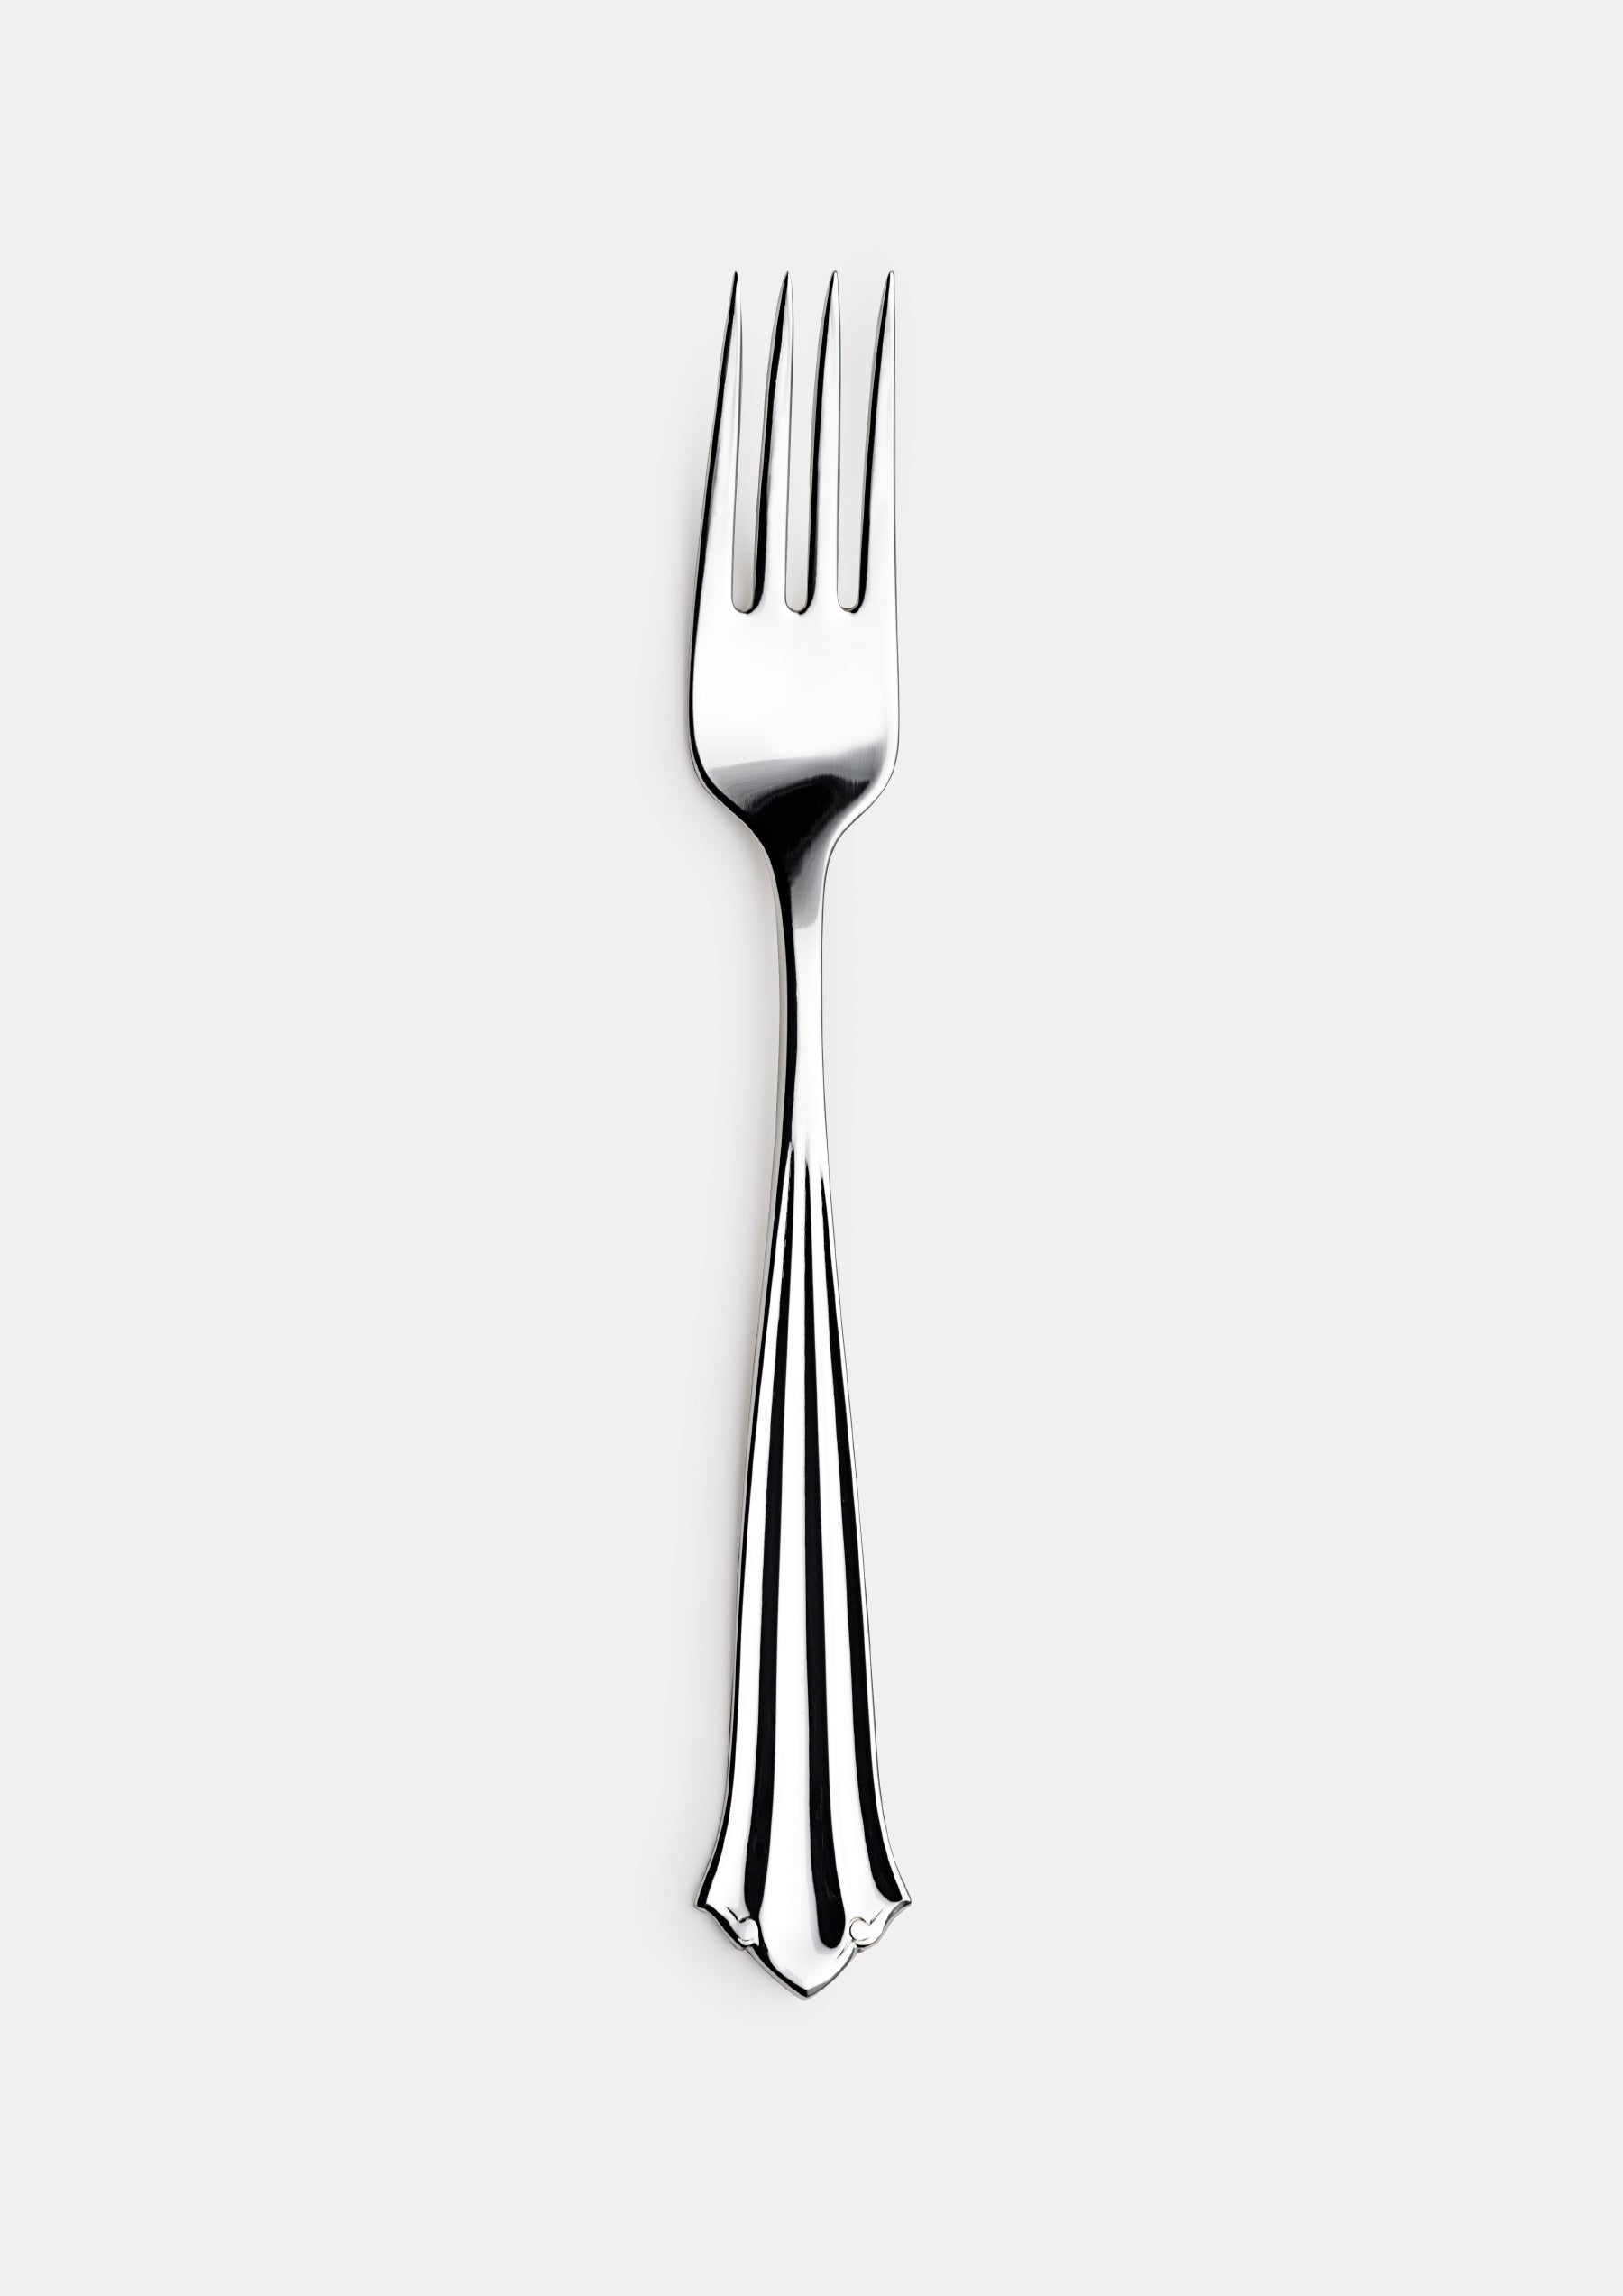 Princess large dining fork